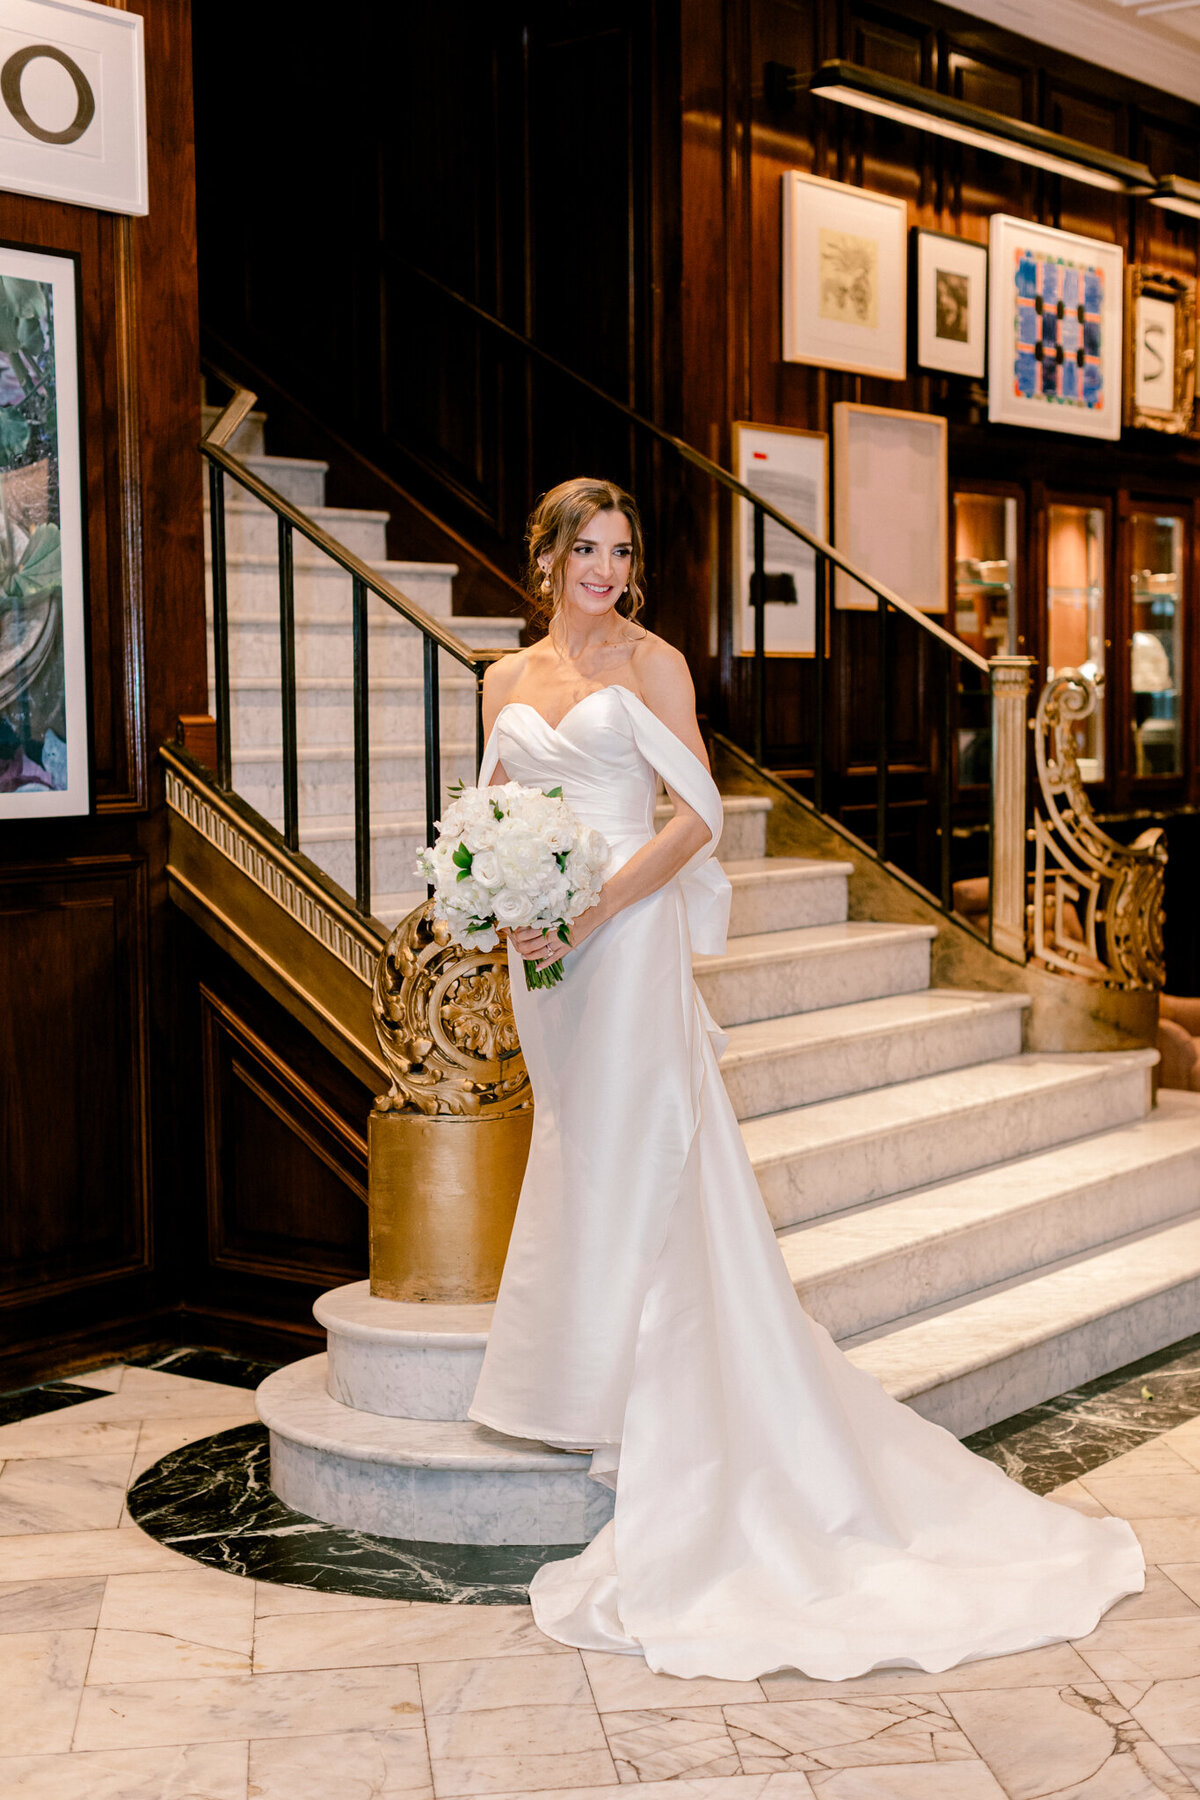 Virginia & Michael's Wedding at the Adolphus Hotel | Dallas Wedding Photographer | Sami Kathryn Photography-137